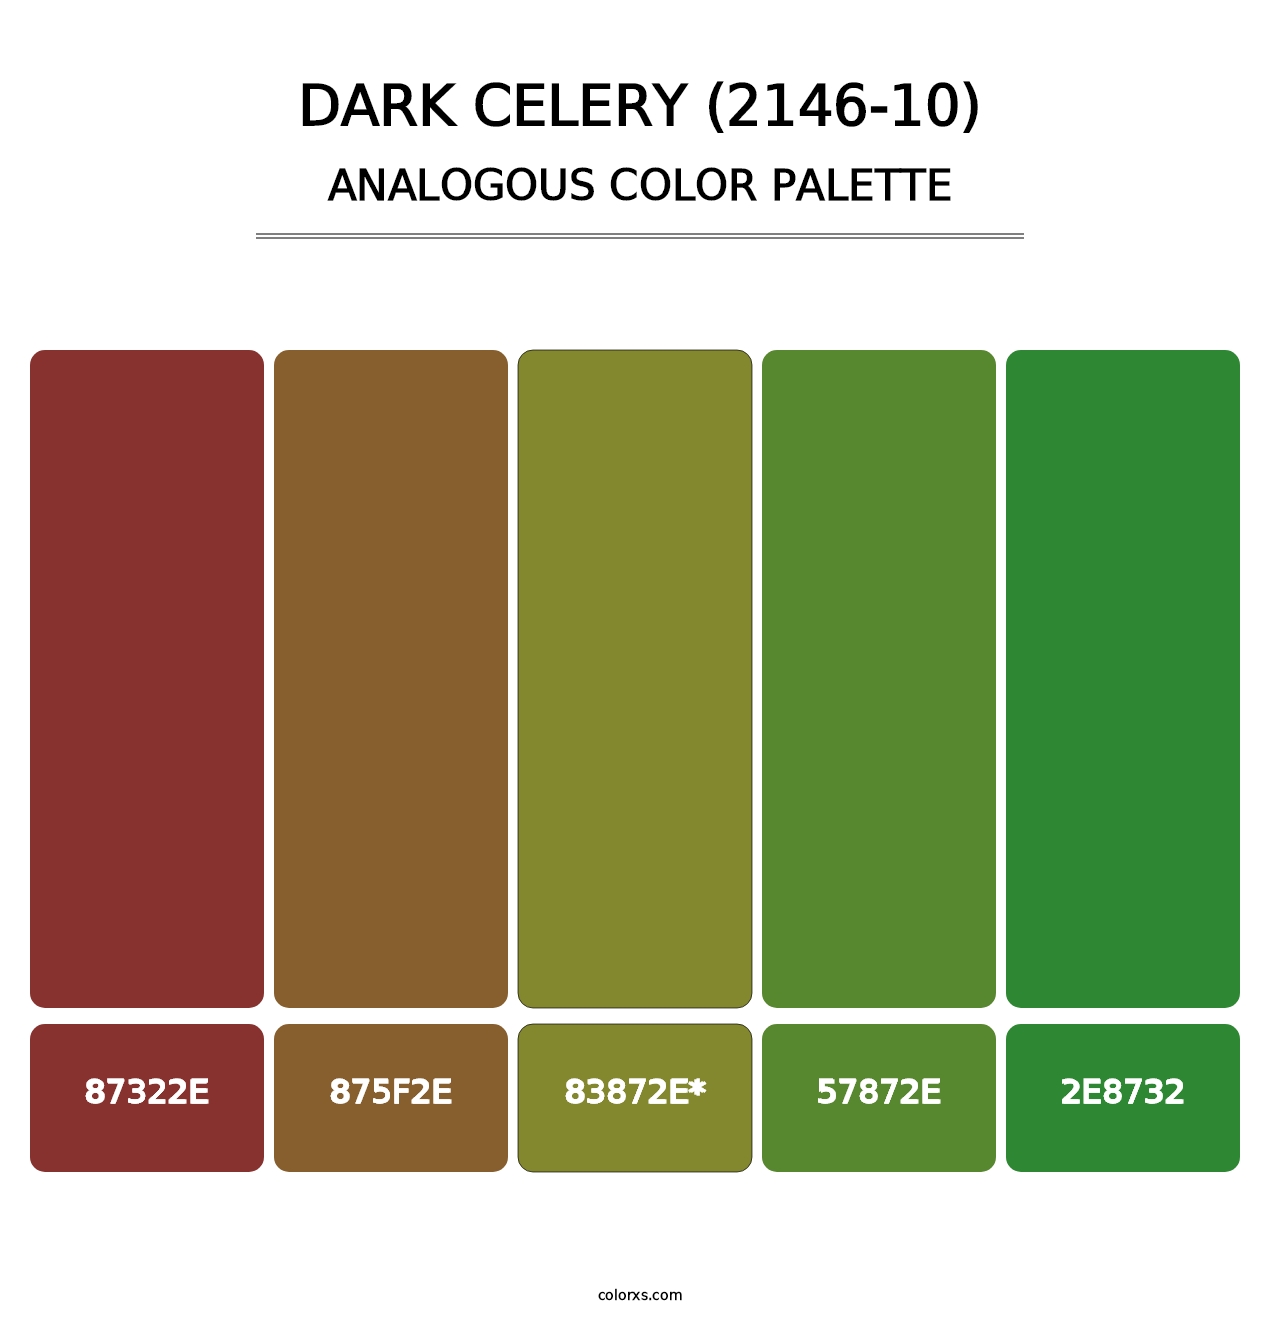 Dark Celery (2146-10) - Analogous Color Palette